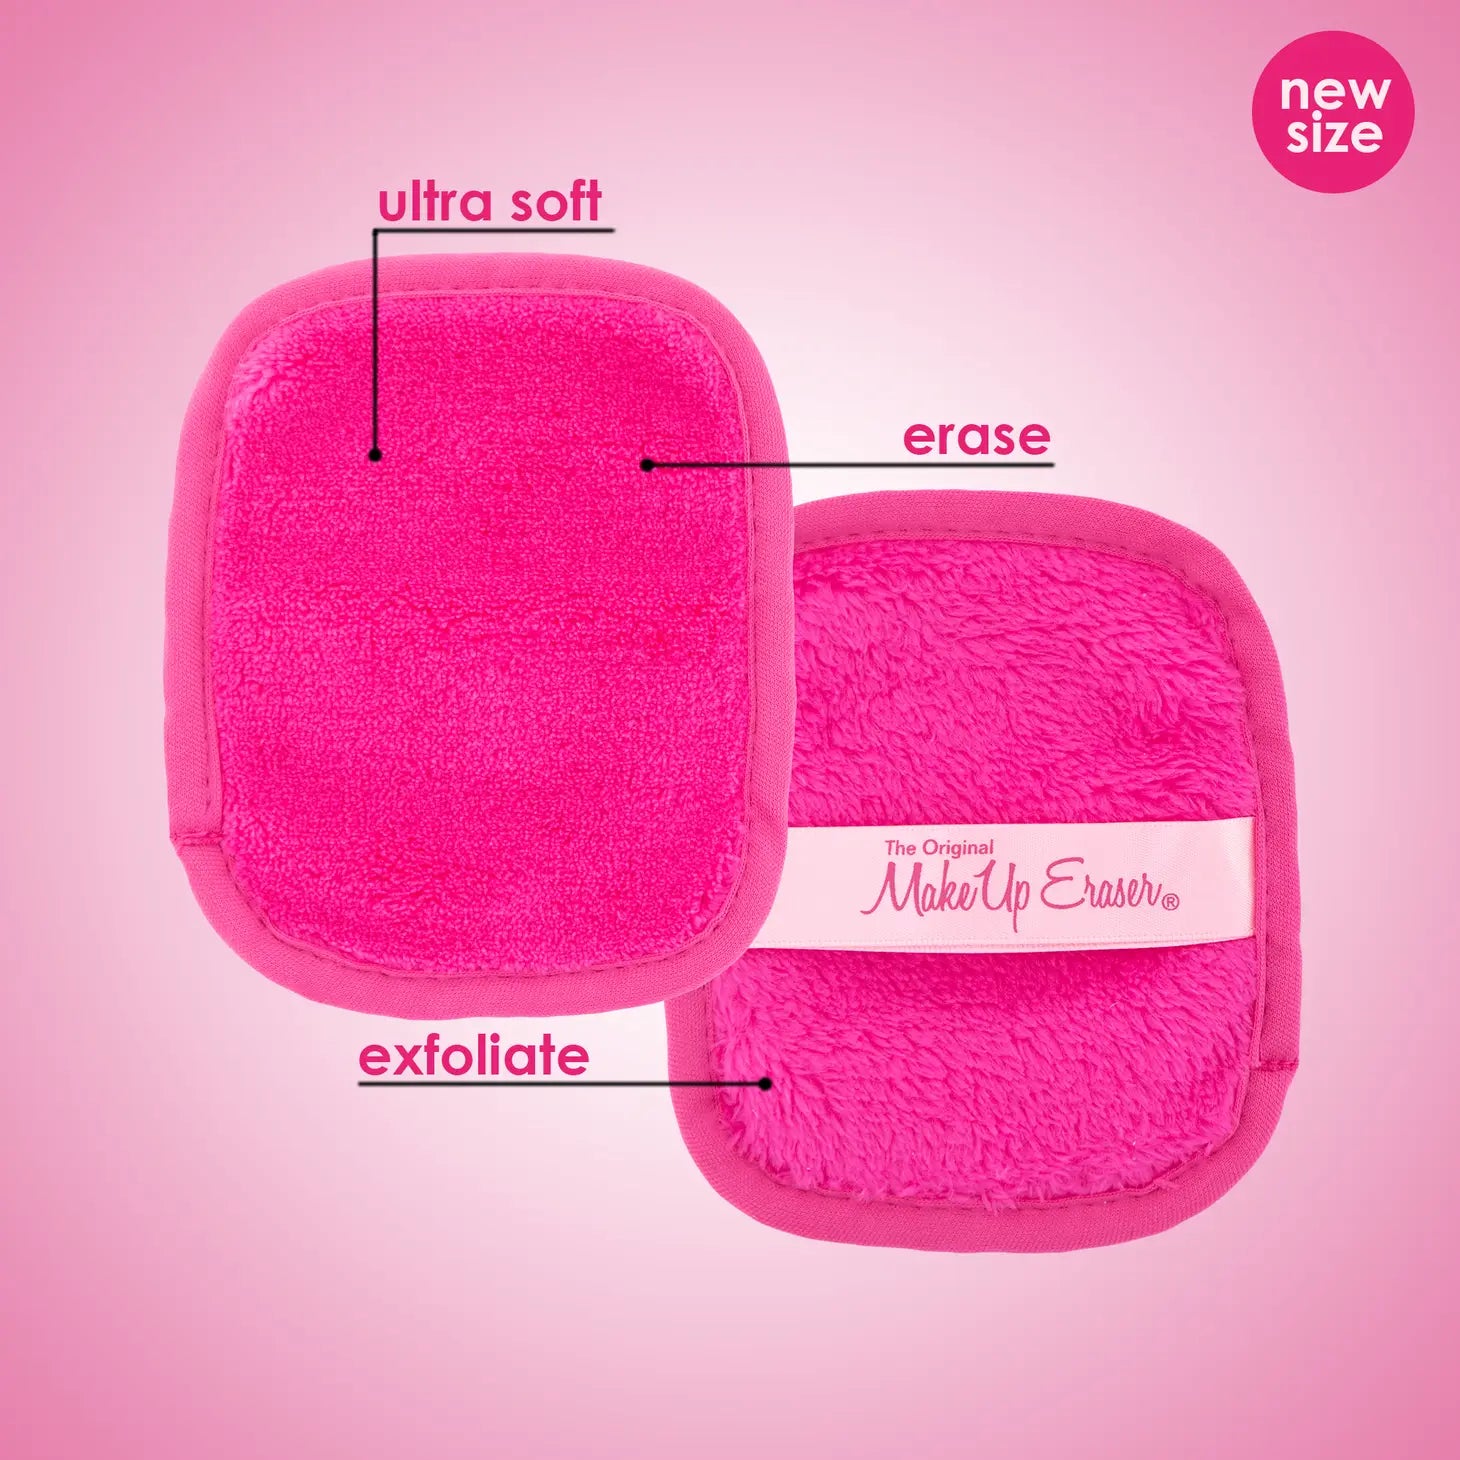 MakeUp Eraser : 7 Day Set - Pink